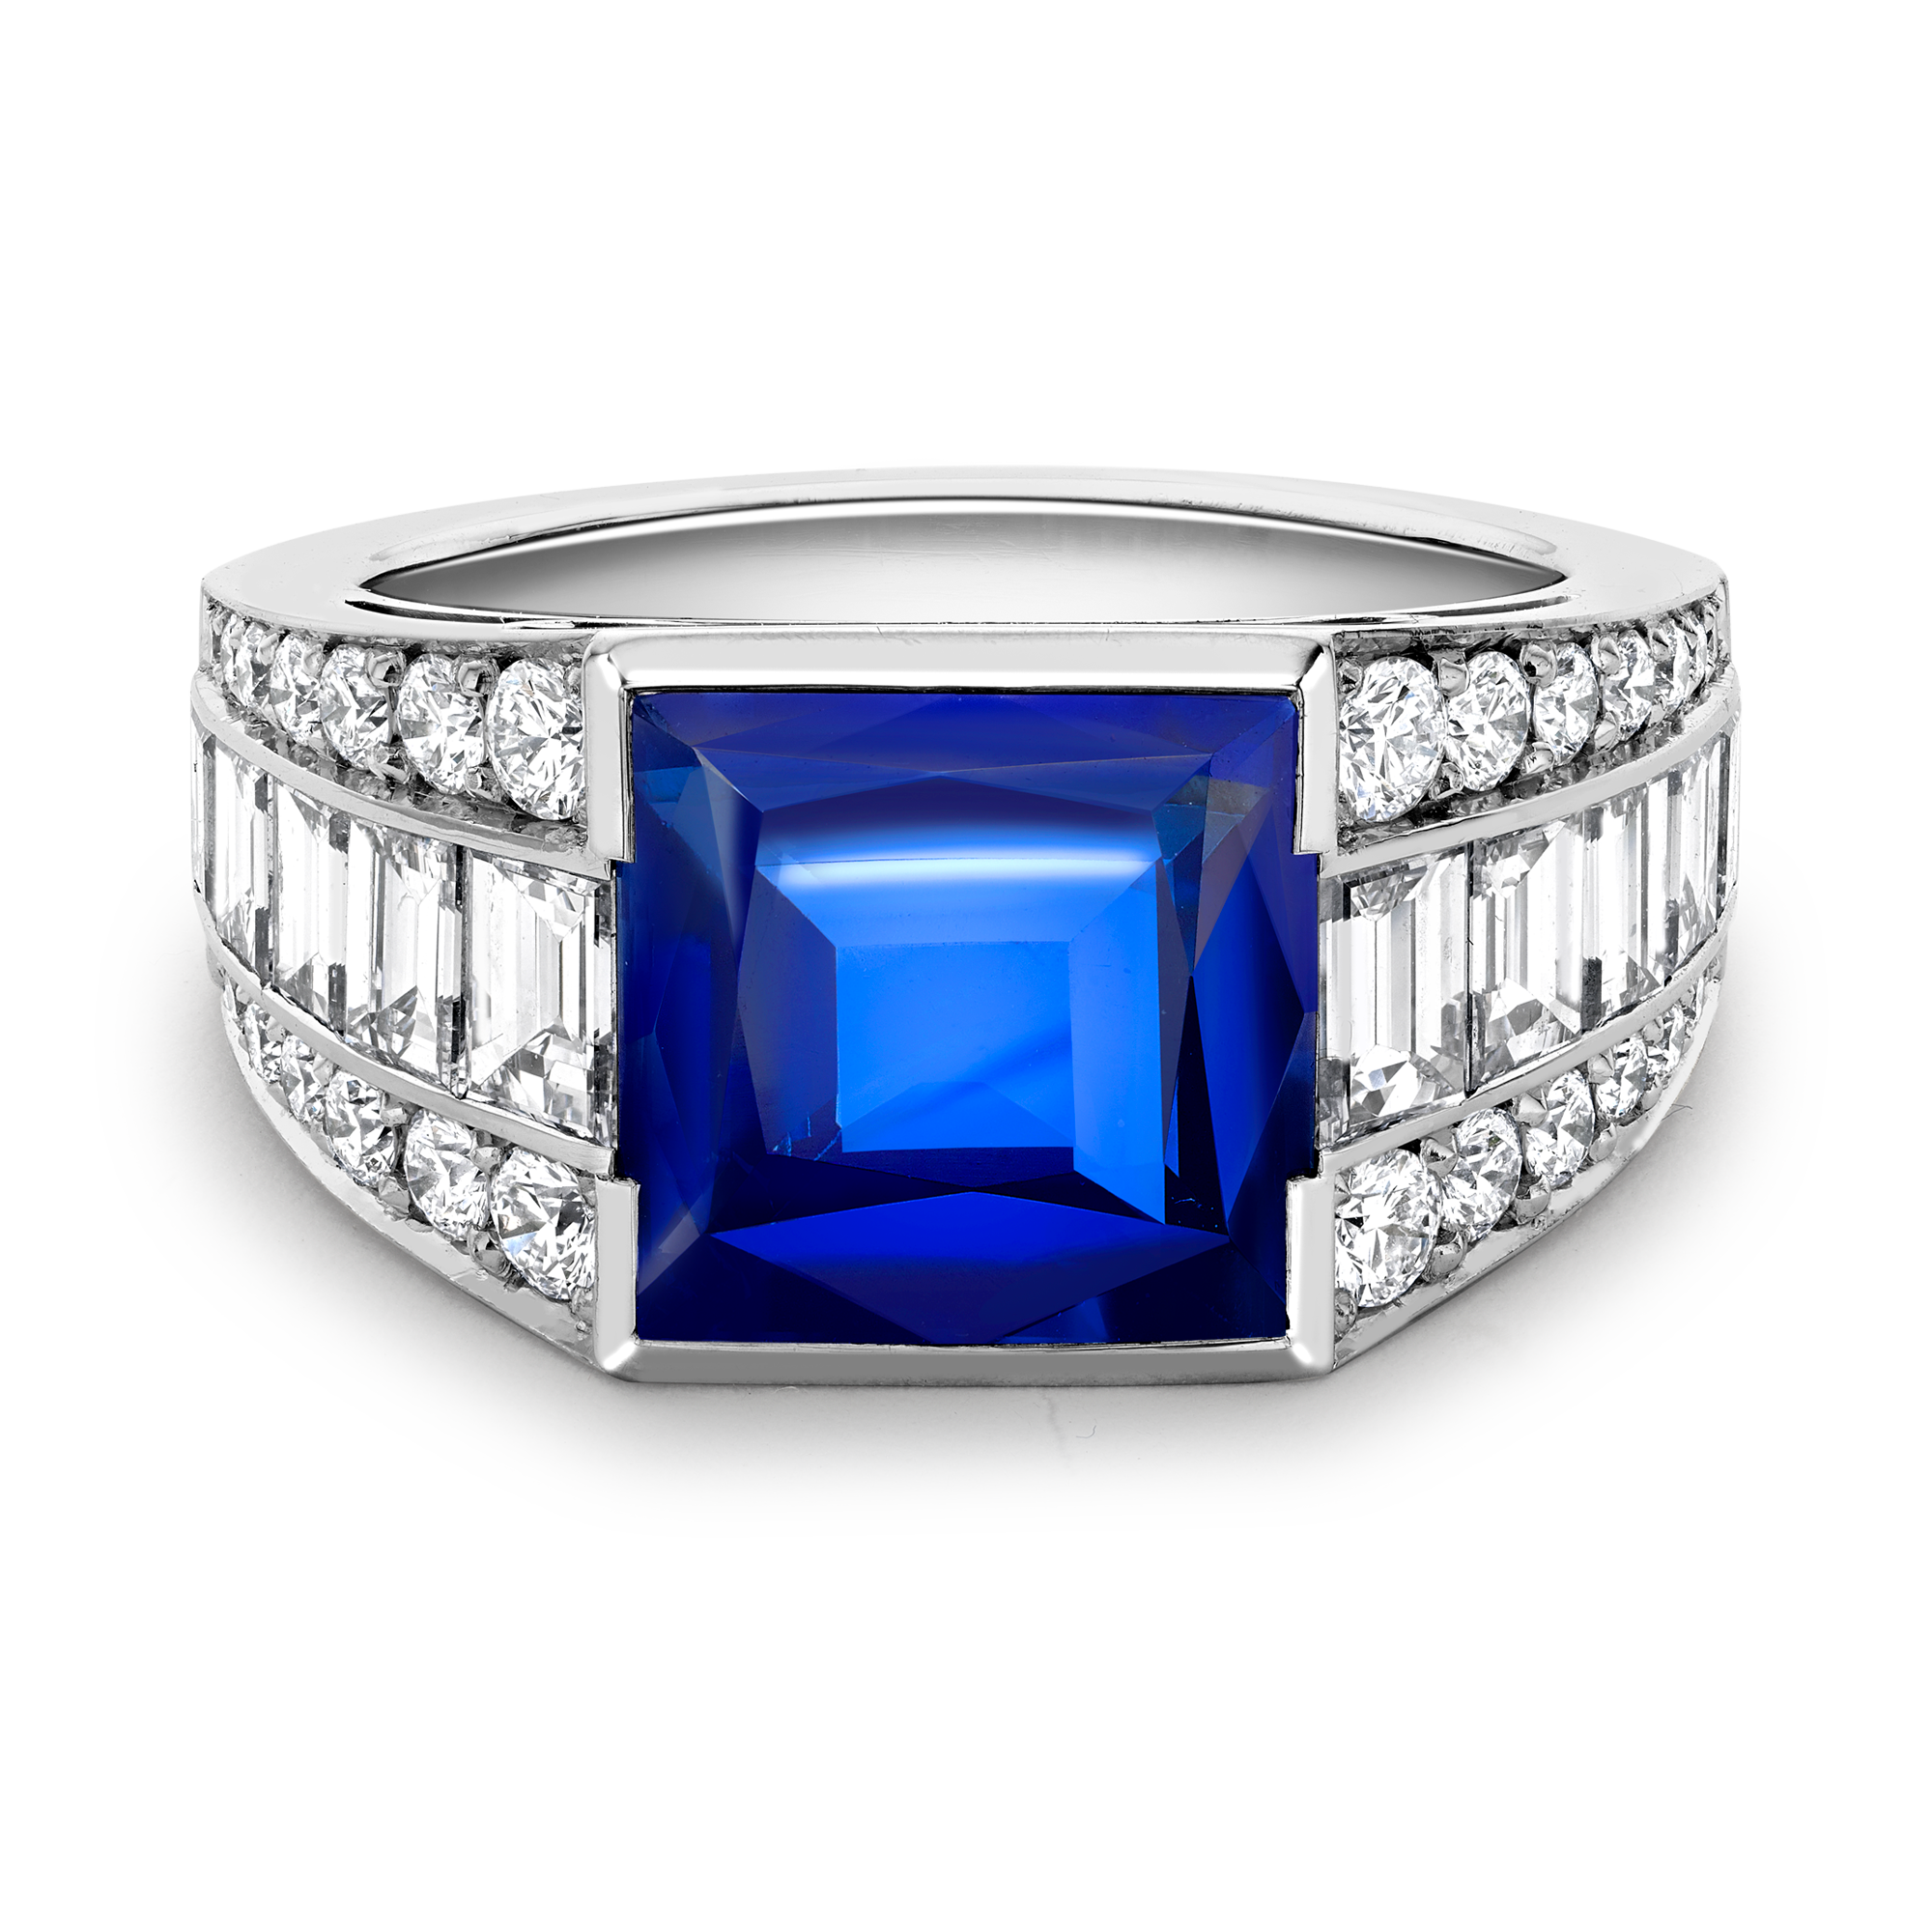 Masterpiece Kashmir Sapphire & Diamond Ring Square Cut, Tapered Baguette Diamond Shoulders, Claw Set_2